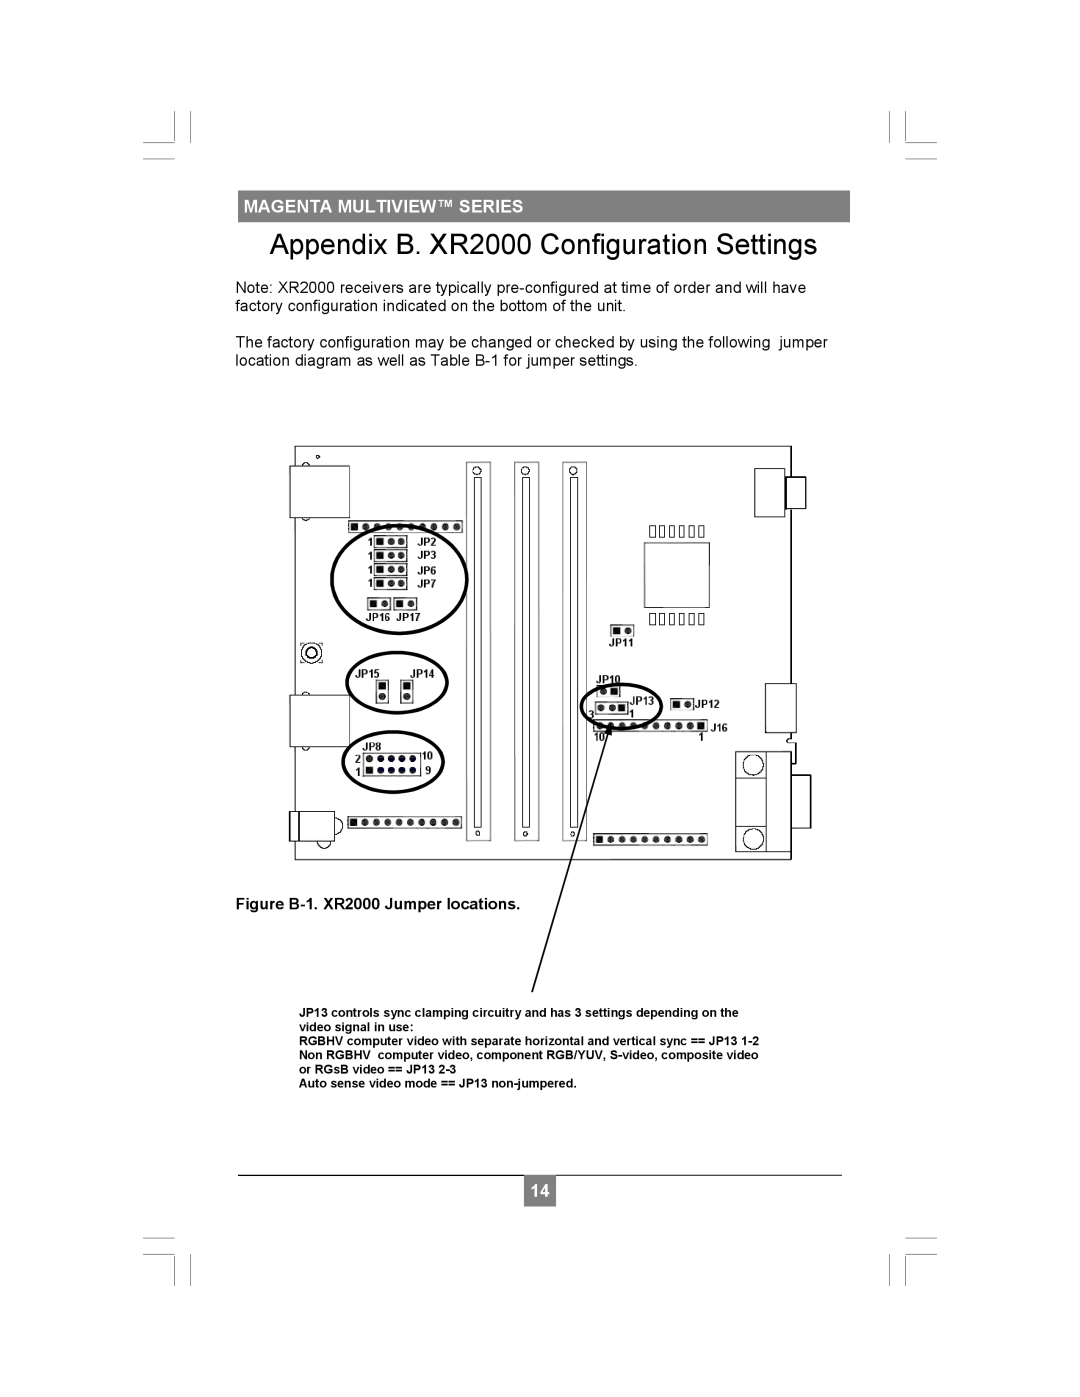 Magenta setup guide Appendix B. XR2000 Configuration Settings, Magenta Multiview Series 